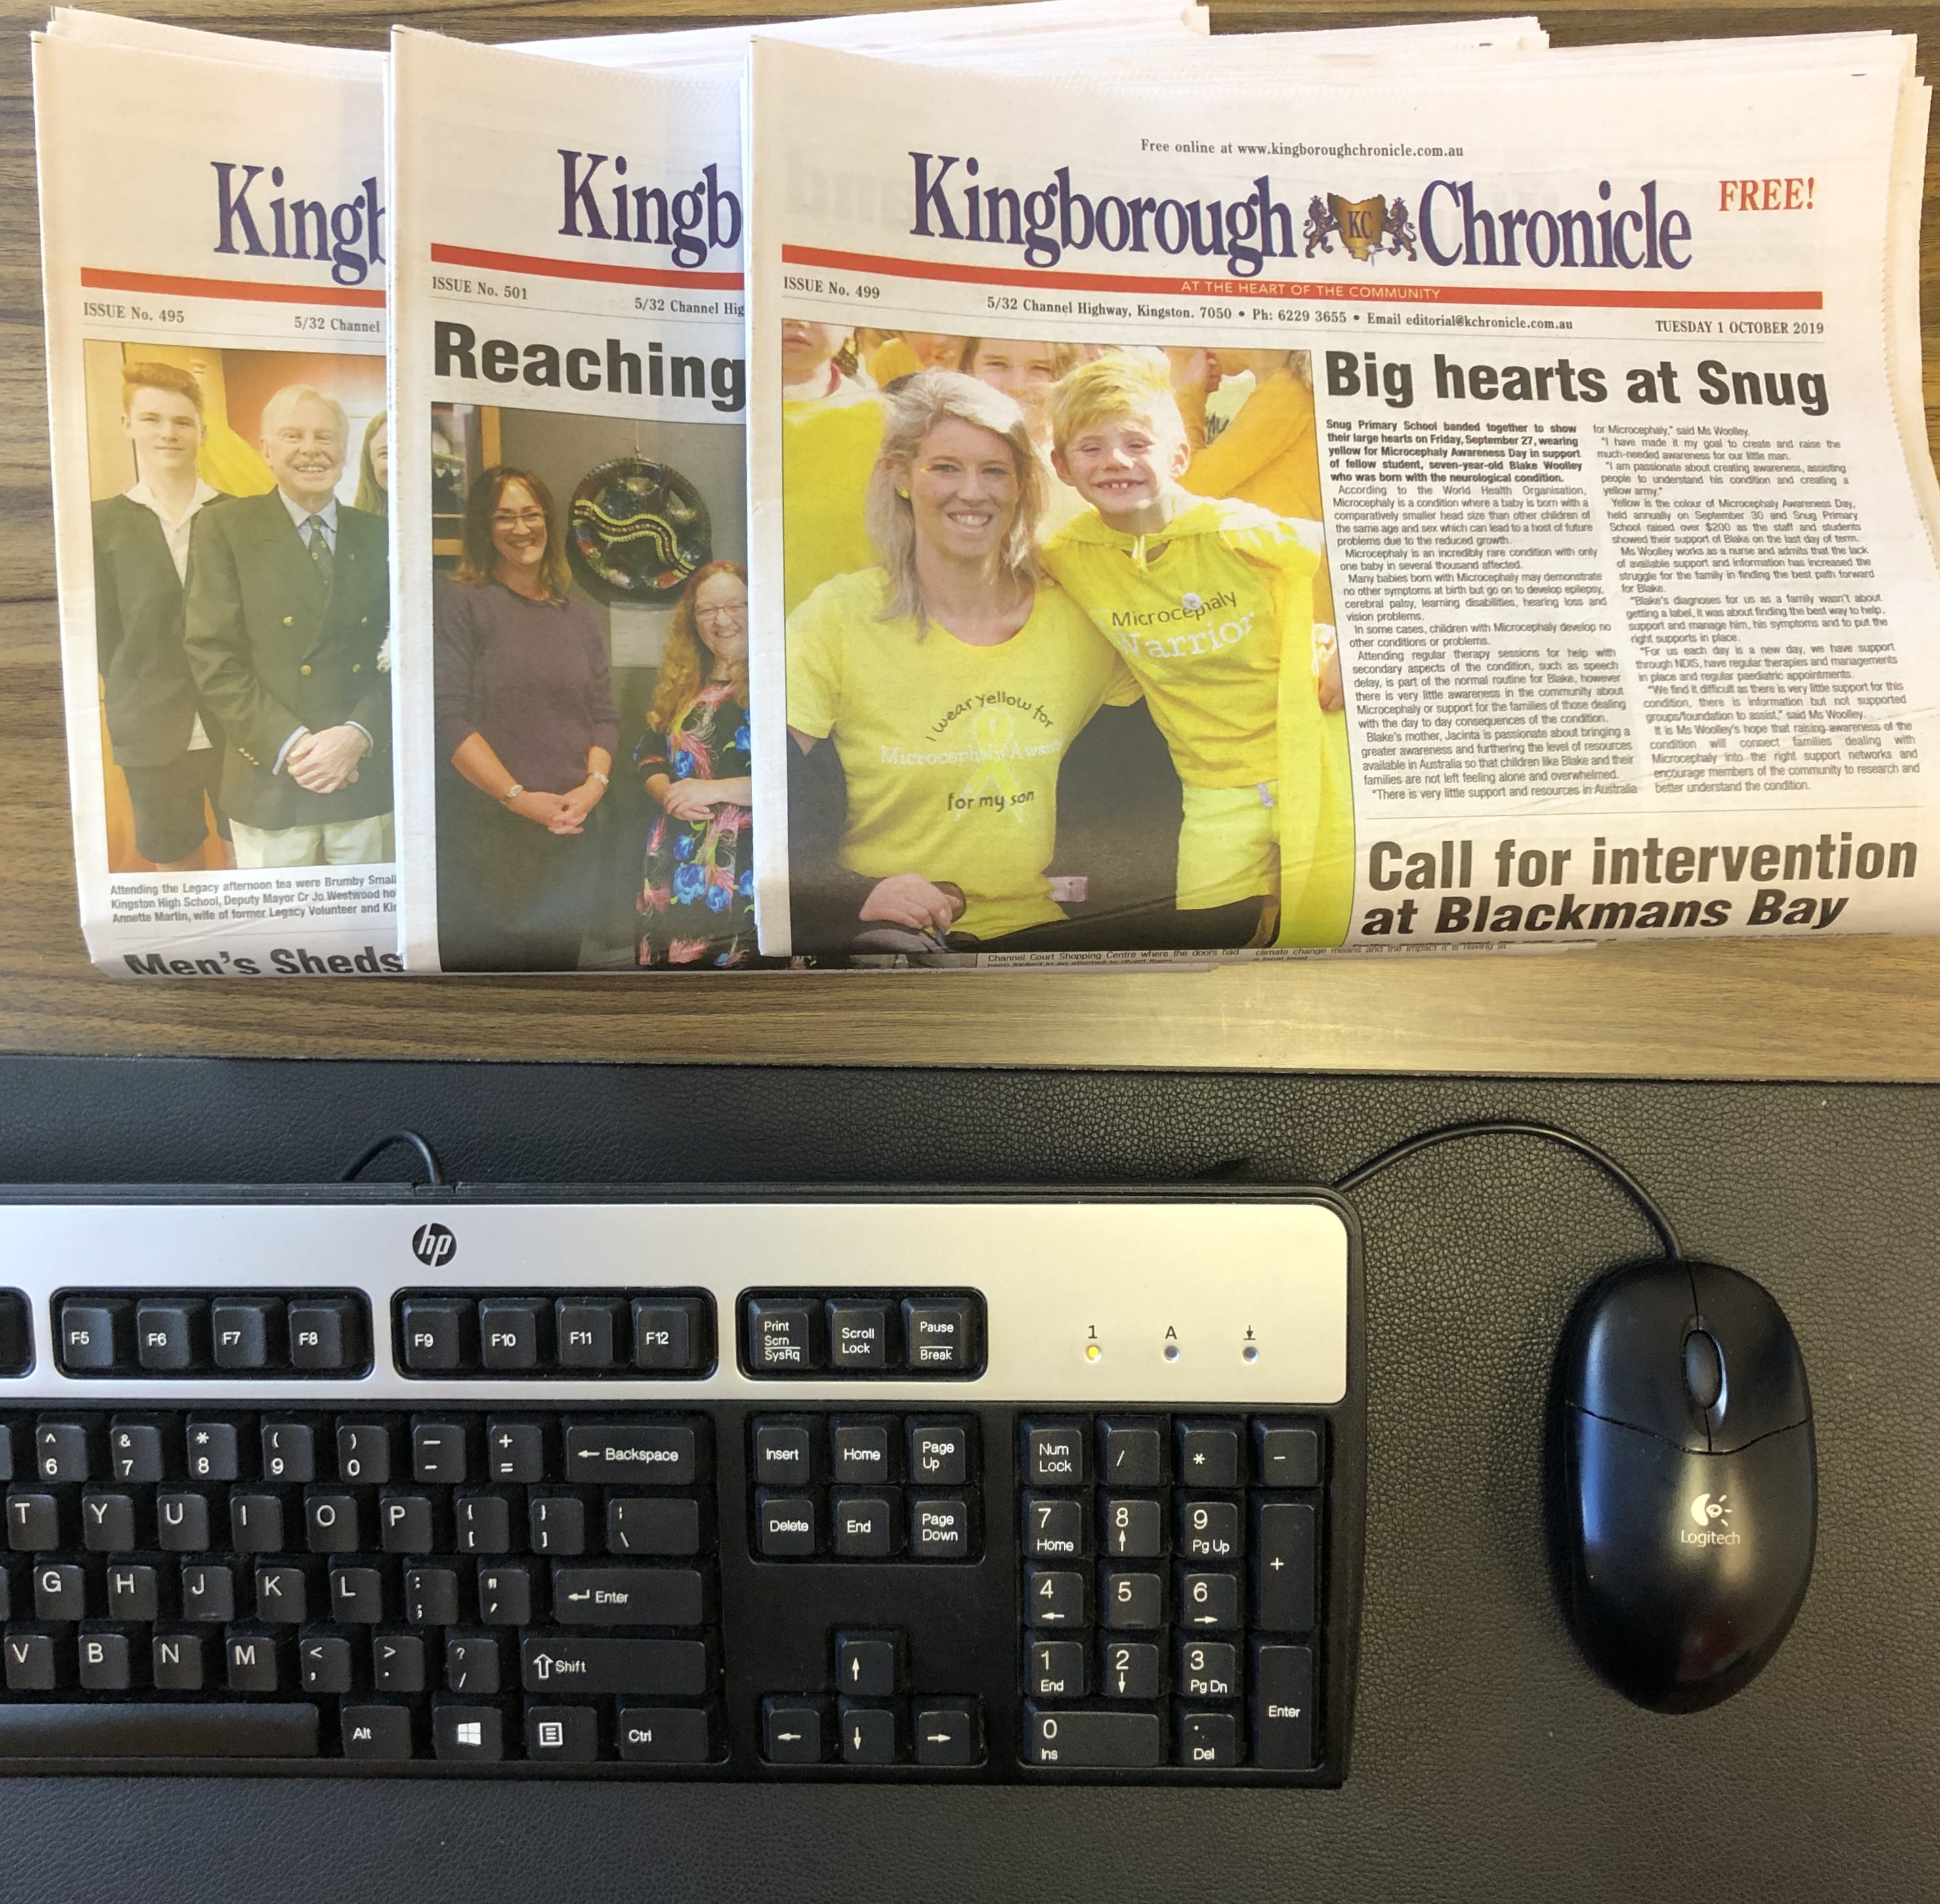 Kingborough Chronicle celebrates decade in print